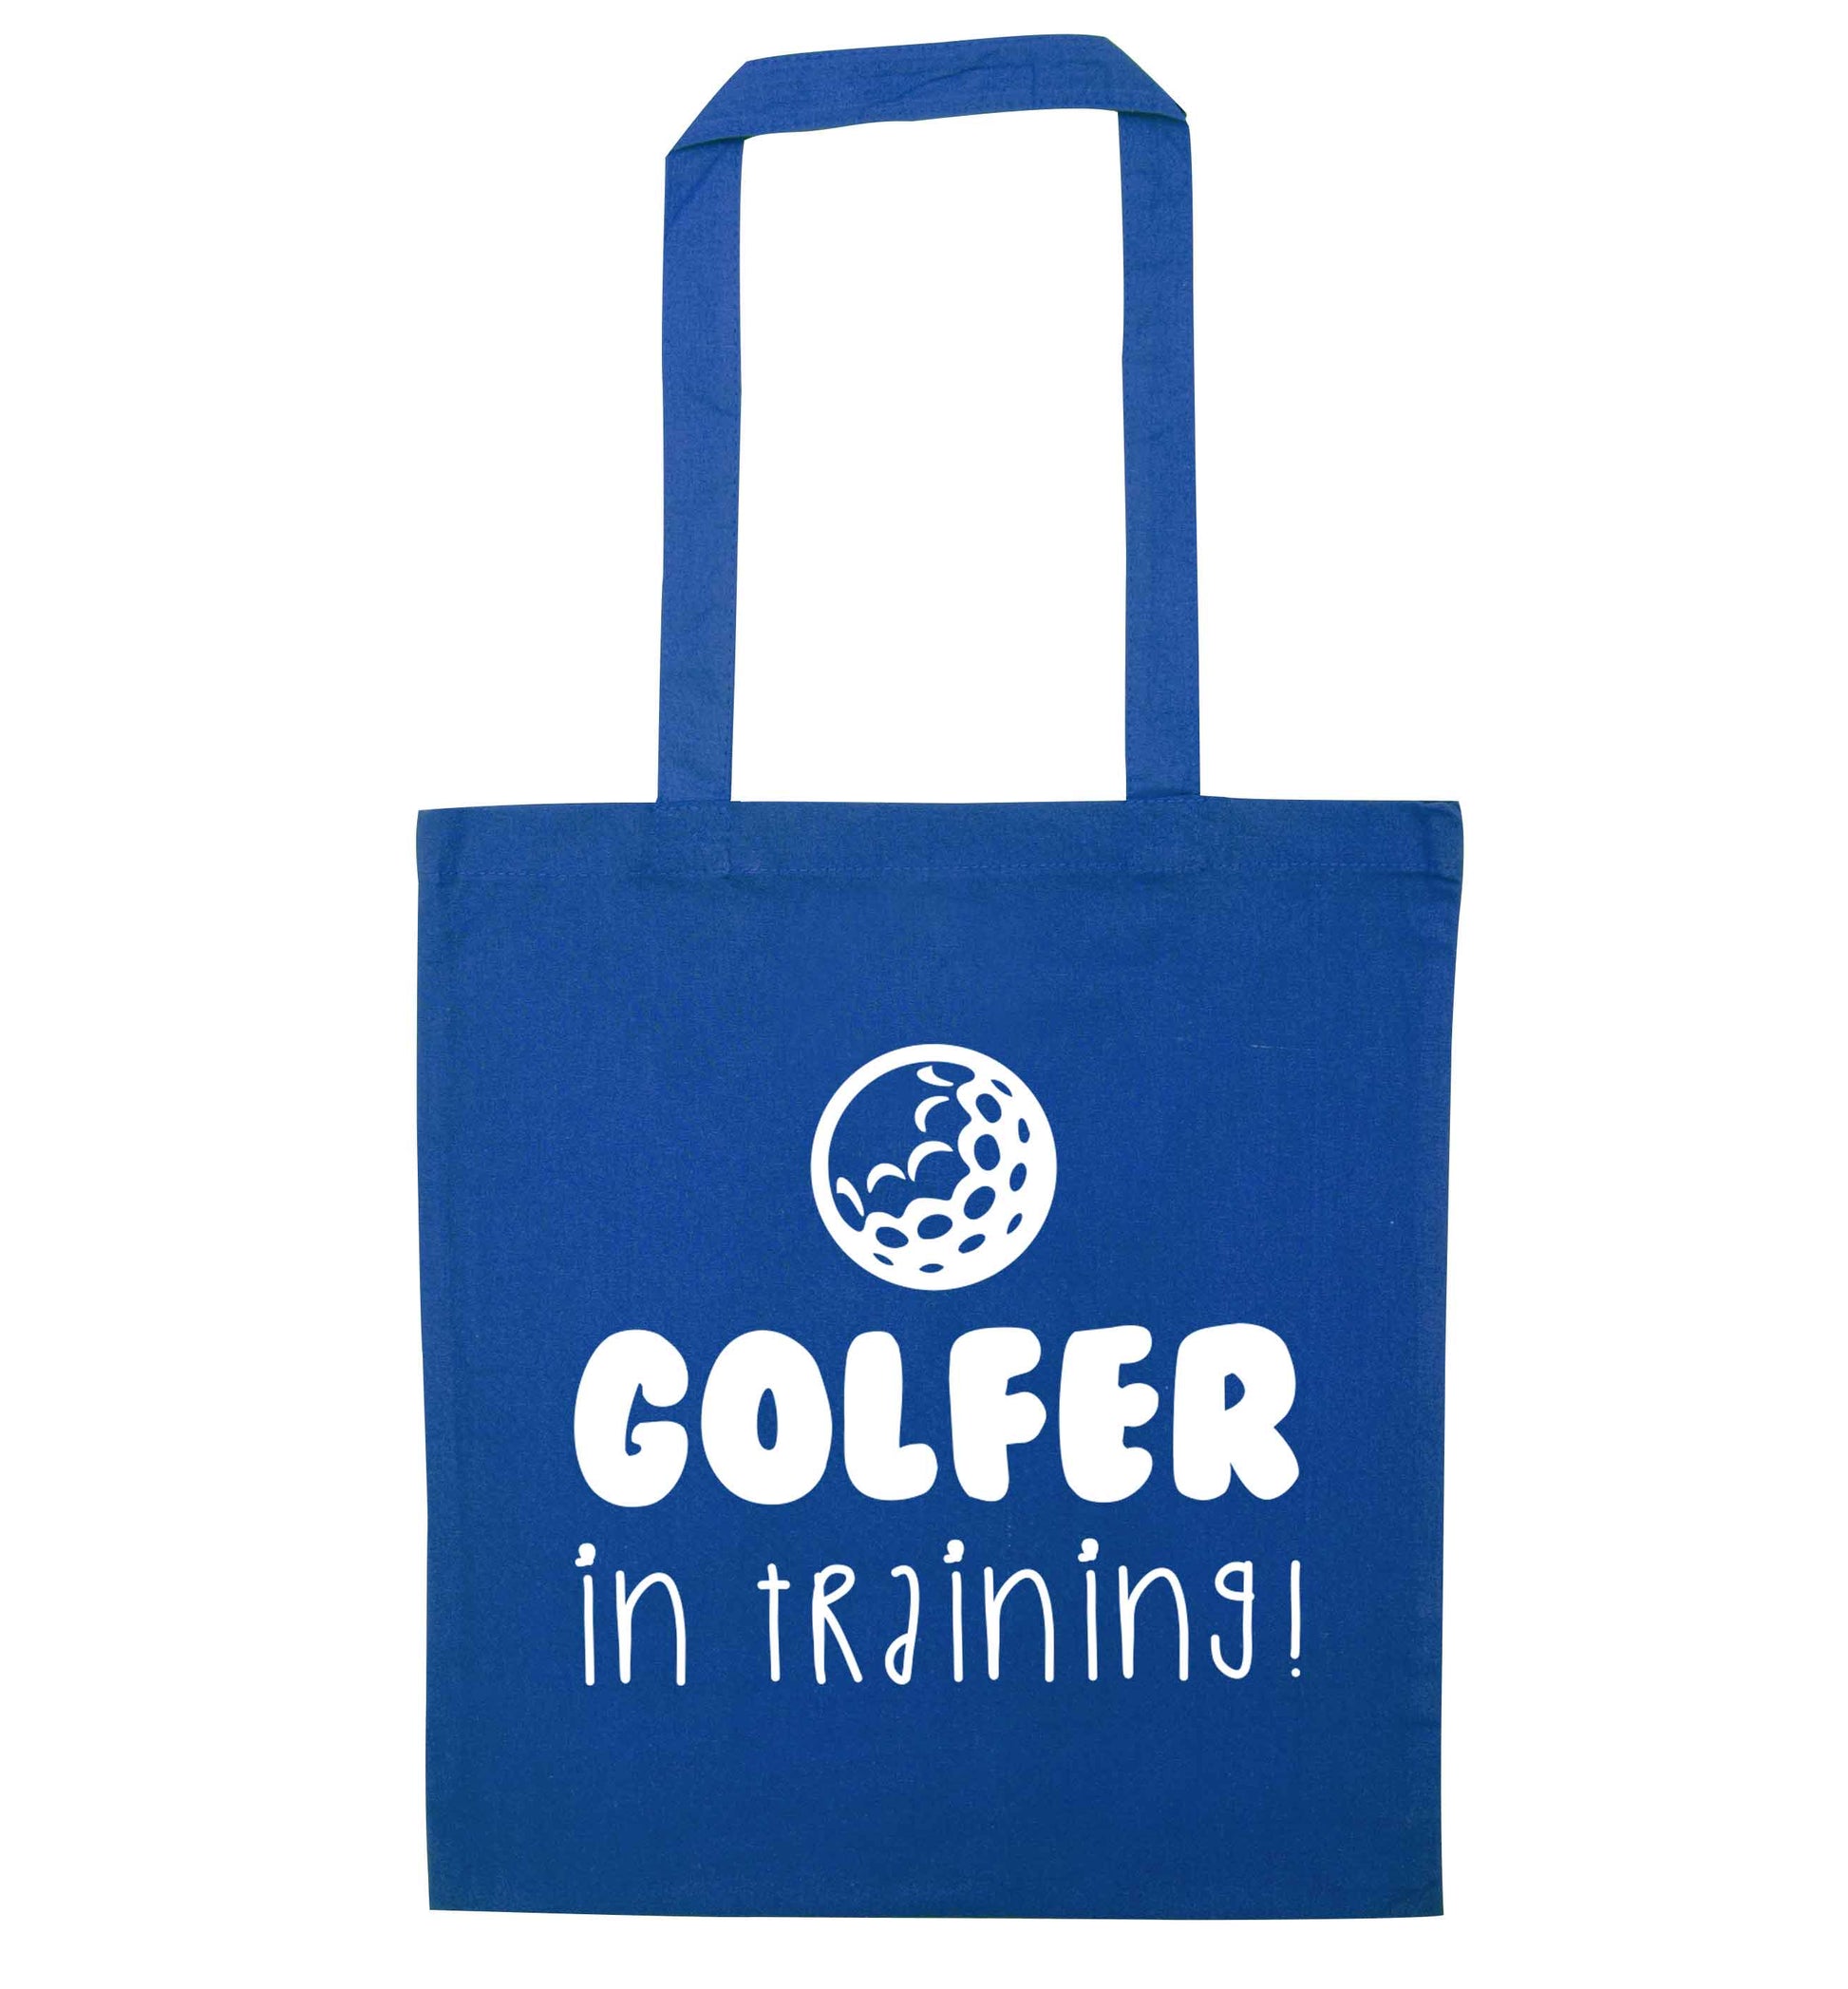 Golfer in training blue tote bag